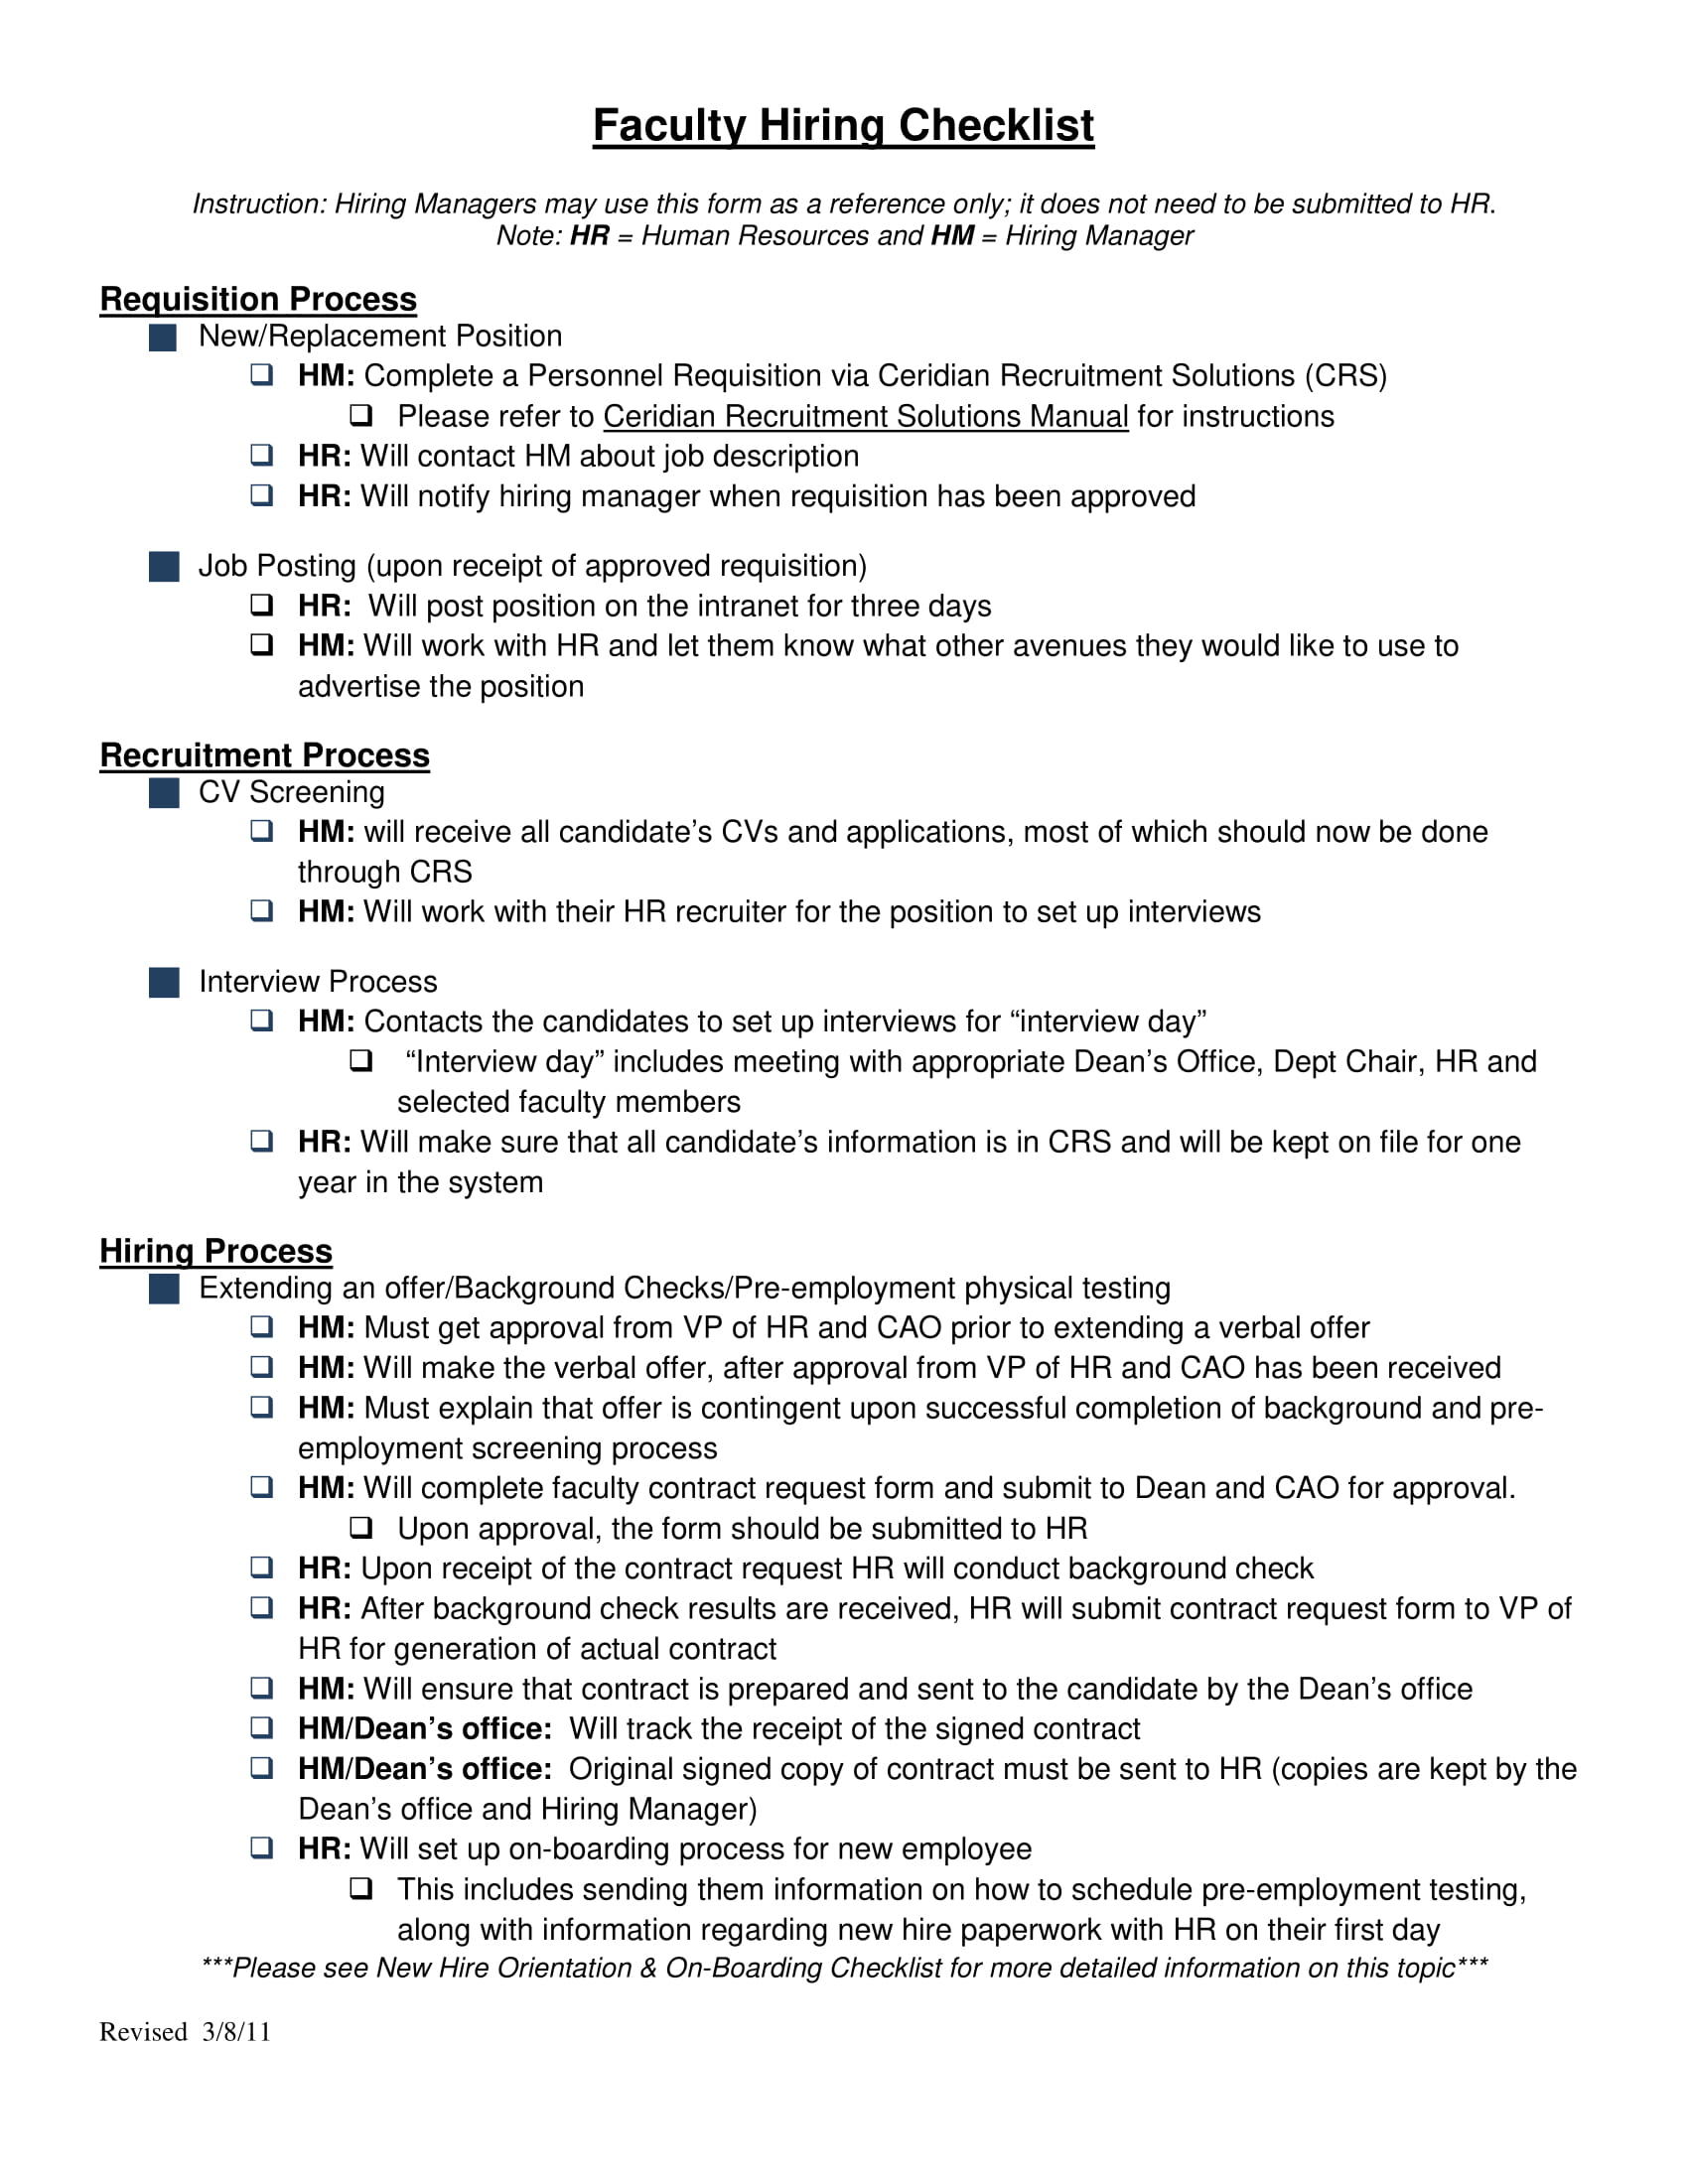 faculty hiring checklist 